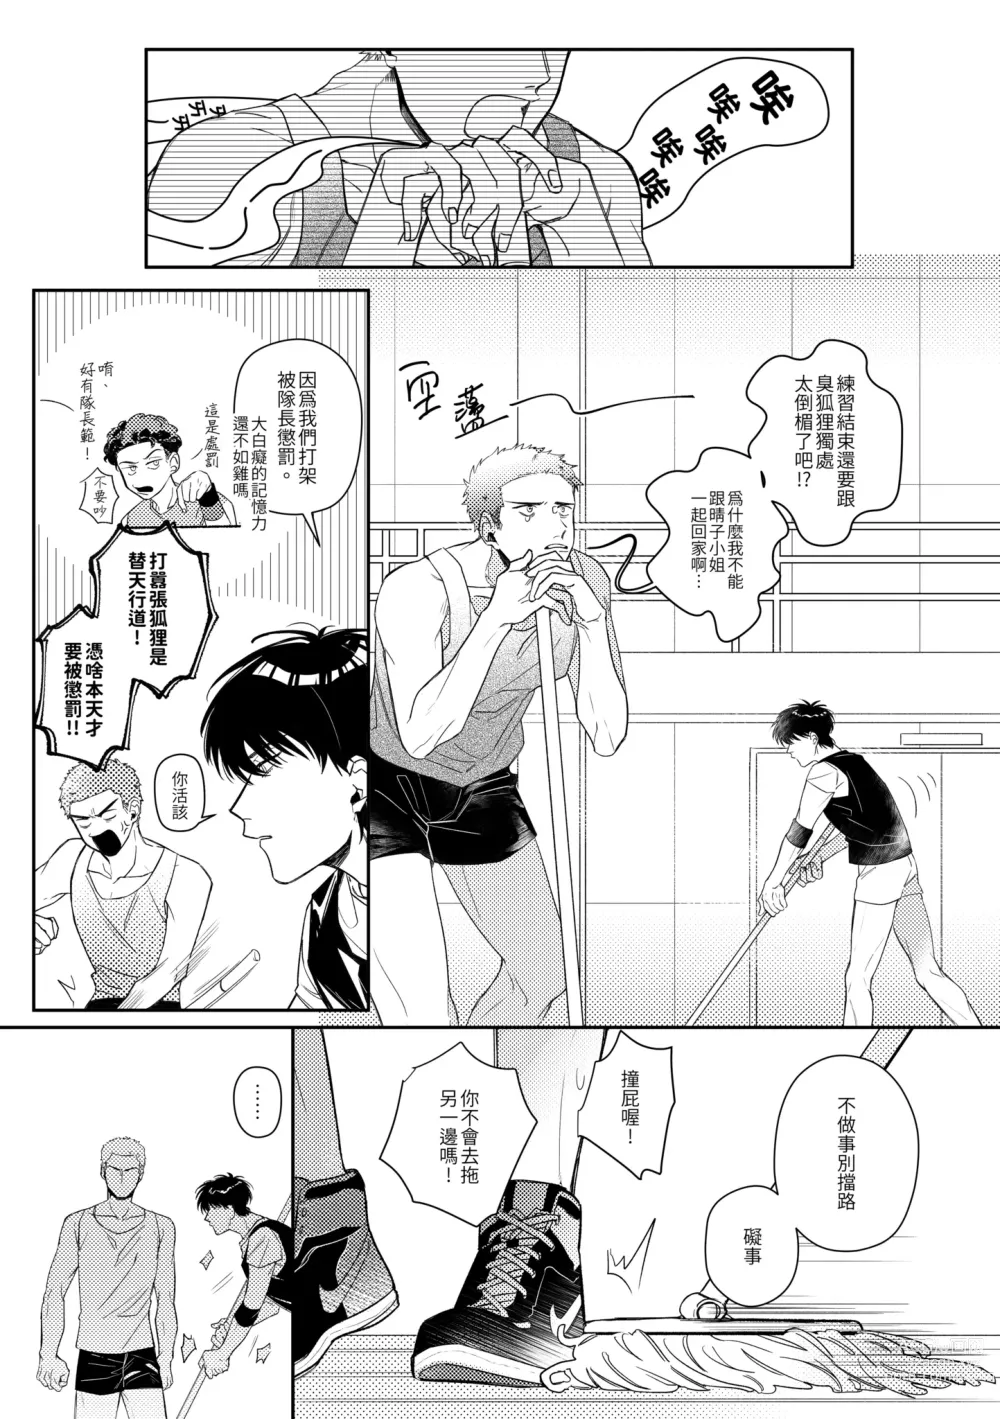 Page 3 of doujinshi 贏到脫褲